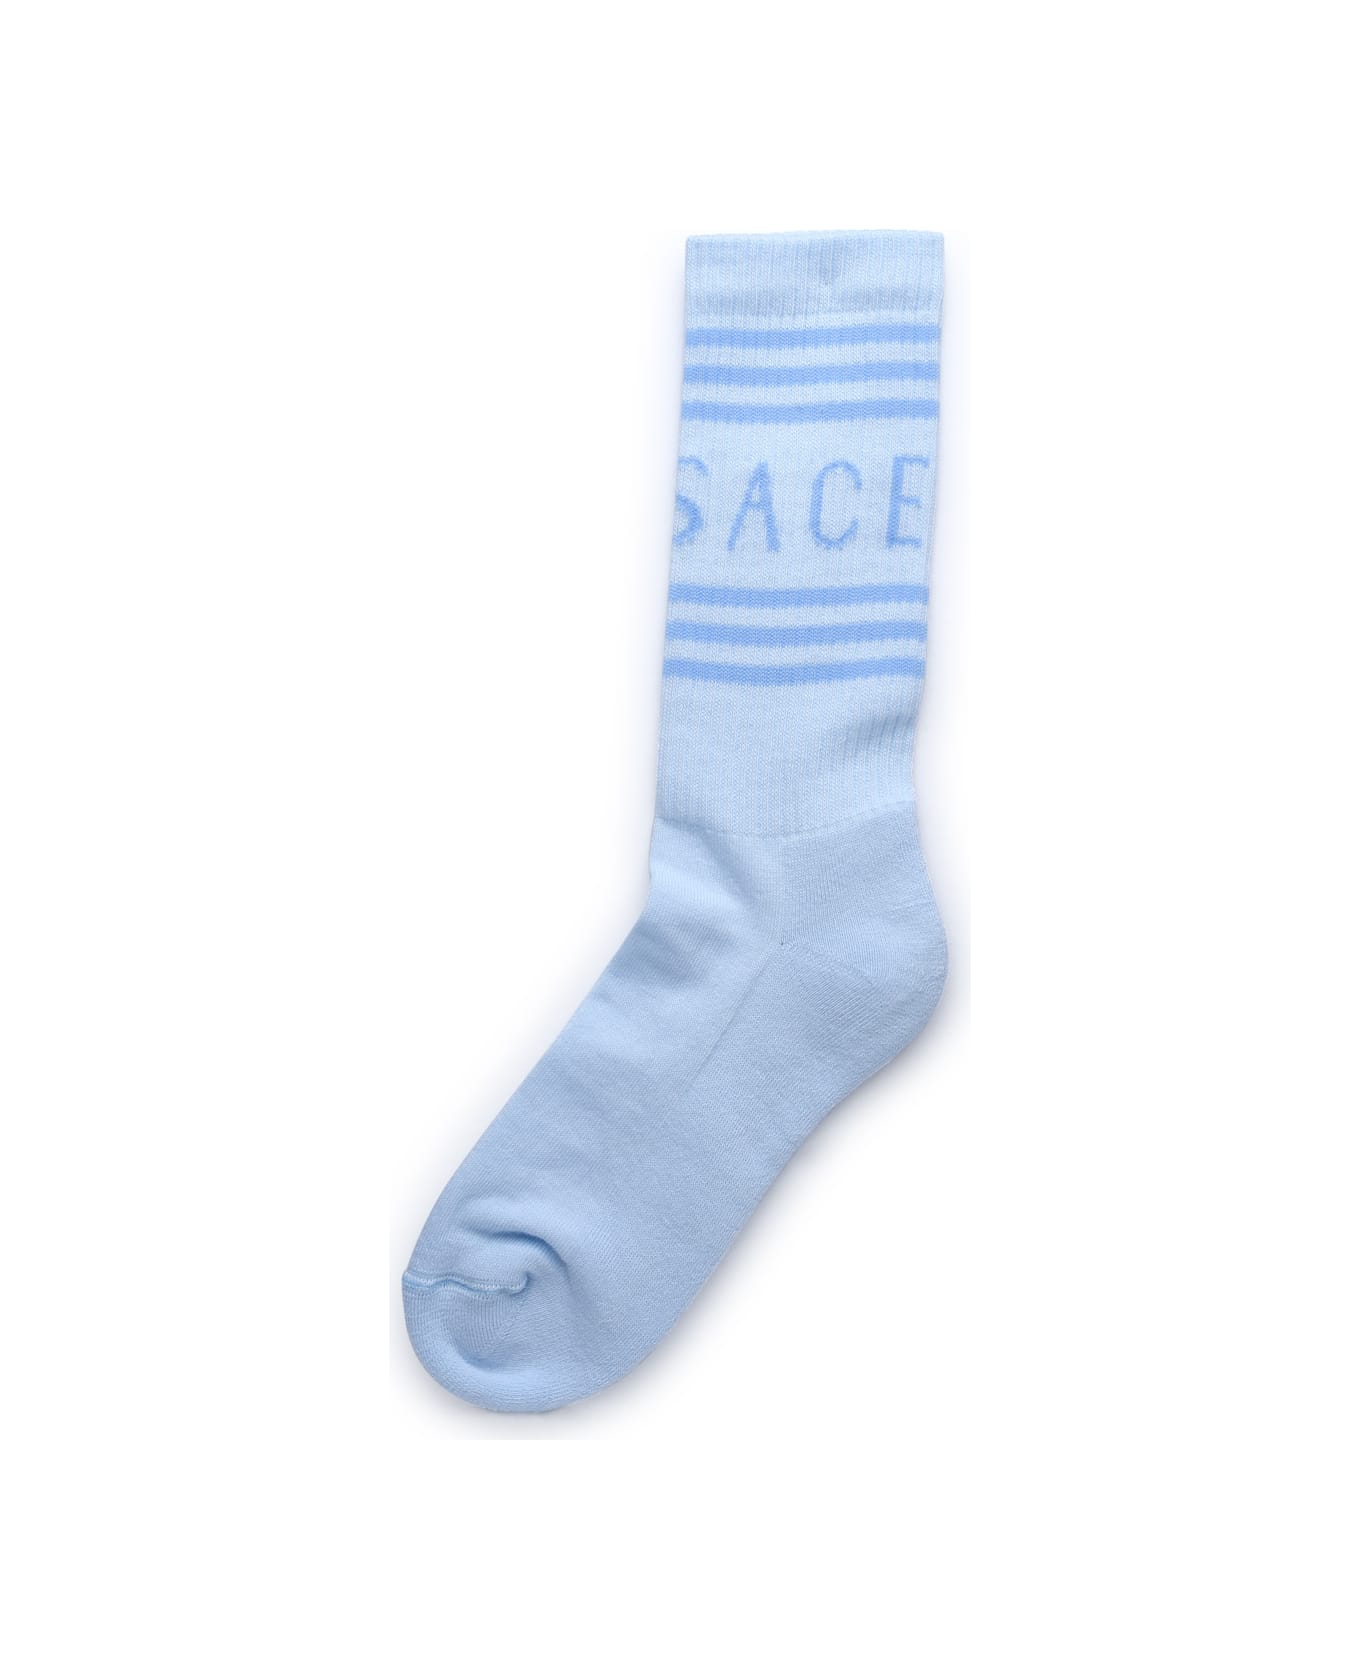 Versace Light Blue Organic Cotton Socks - Light Blue